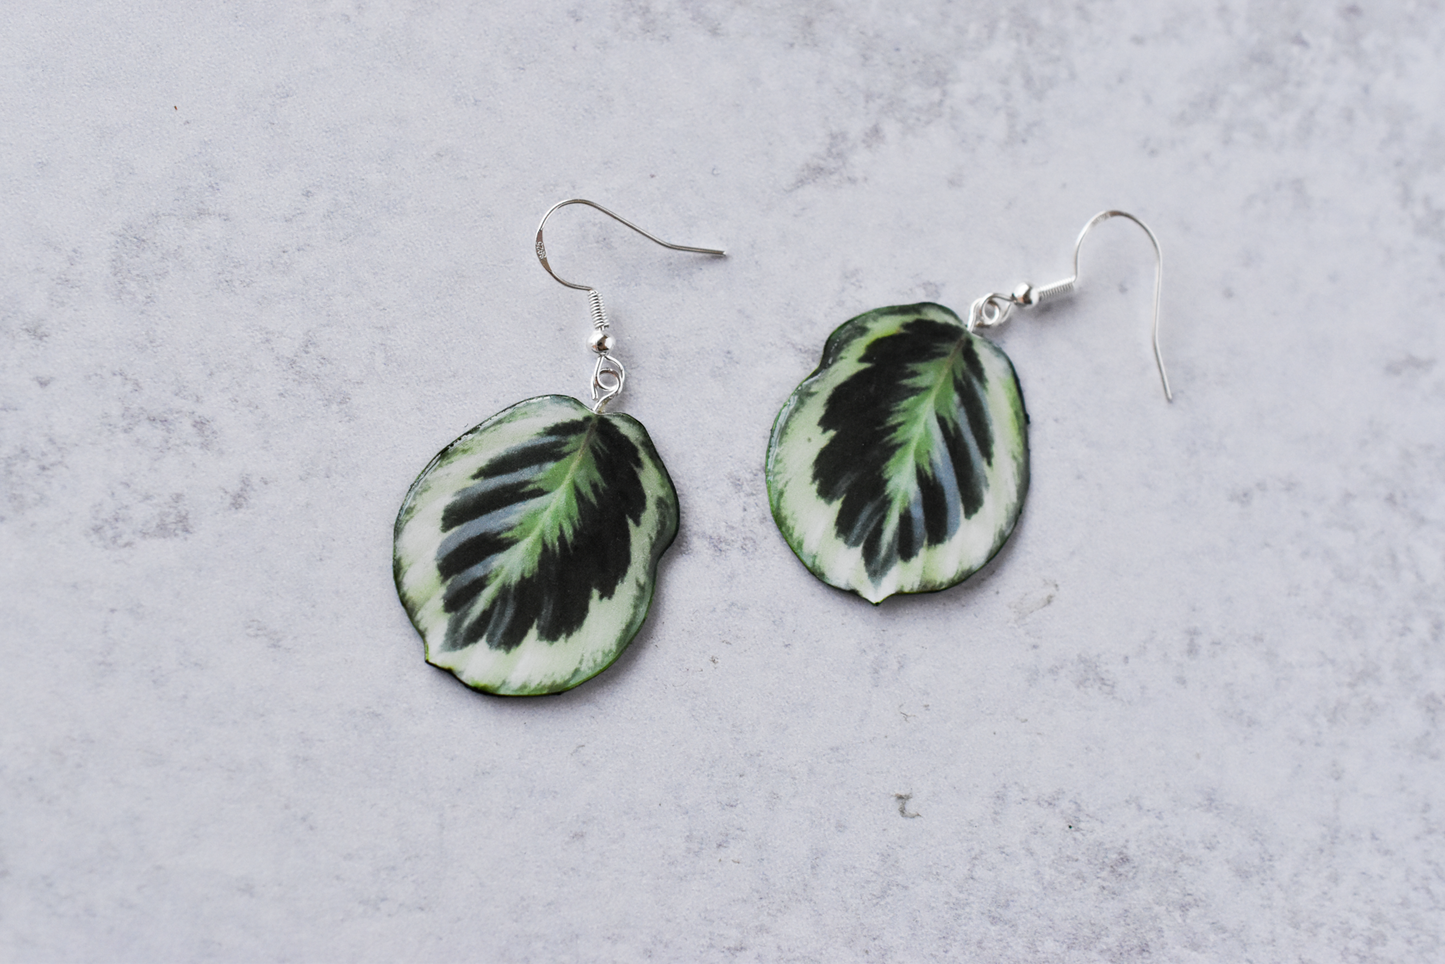 Calathea Roseopicta “Marion” Plant Earrings | Leaf Earrings